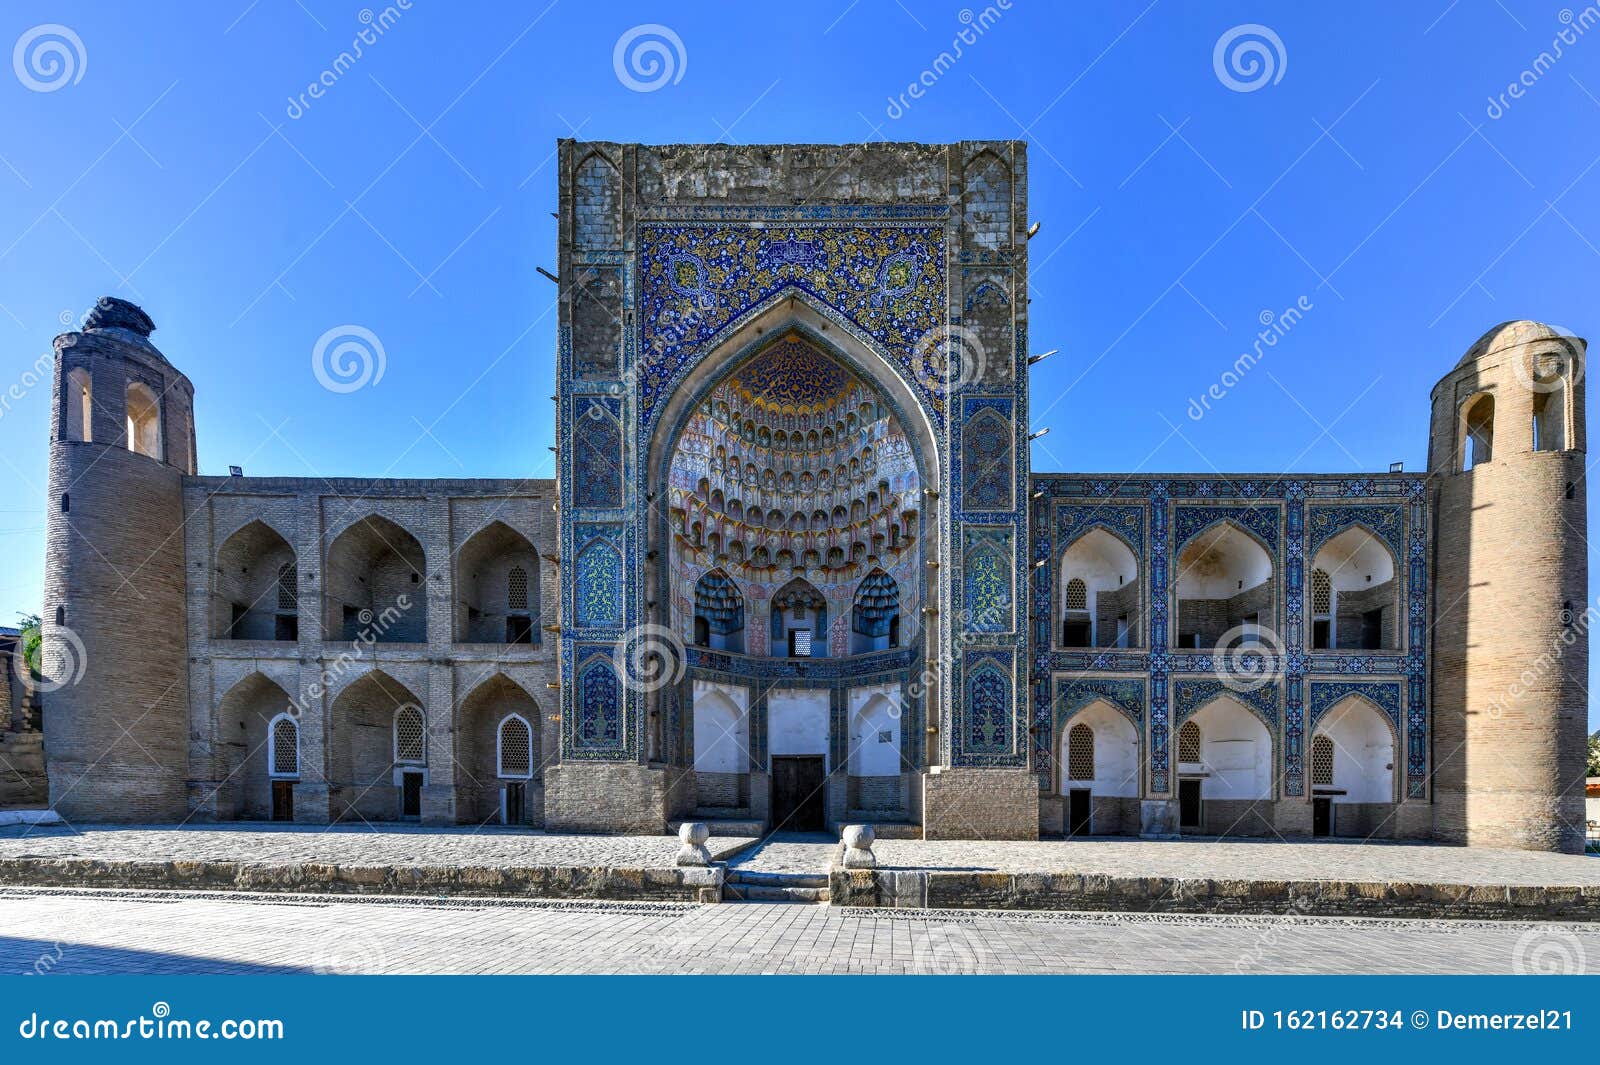 madrasah of abdulaziz khan - bukhara, uzbekistan